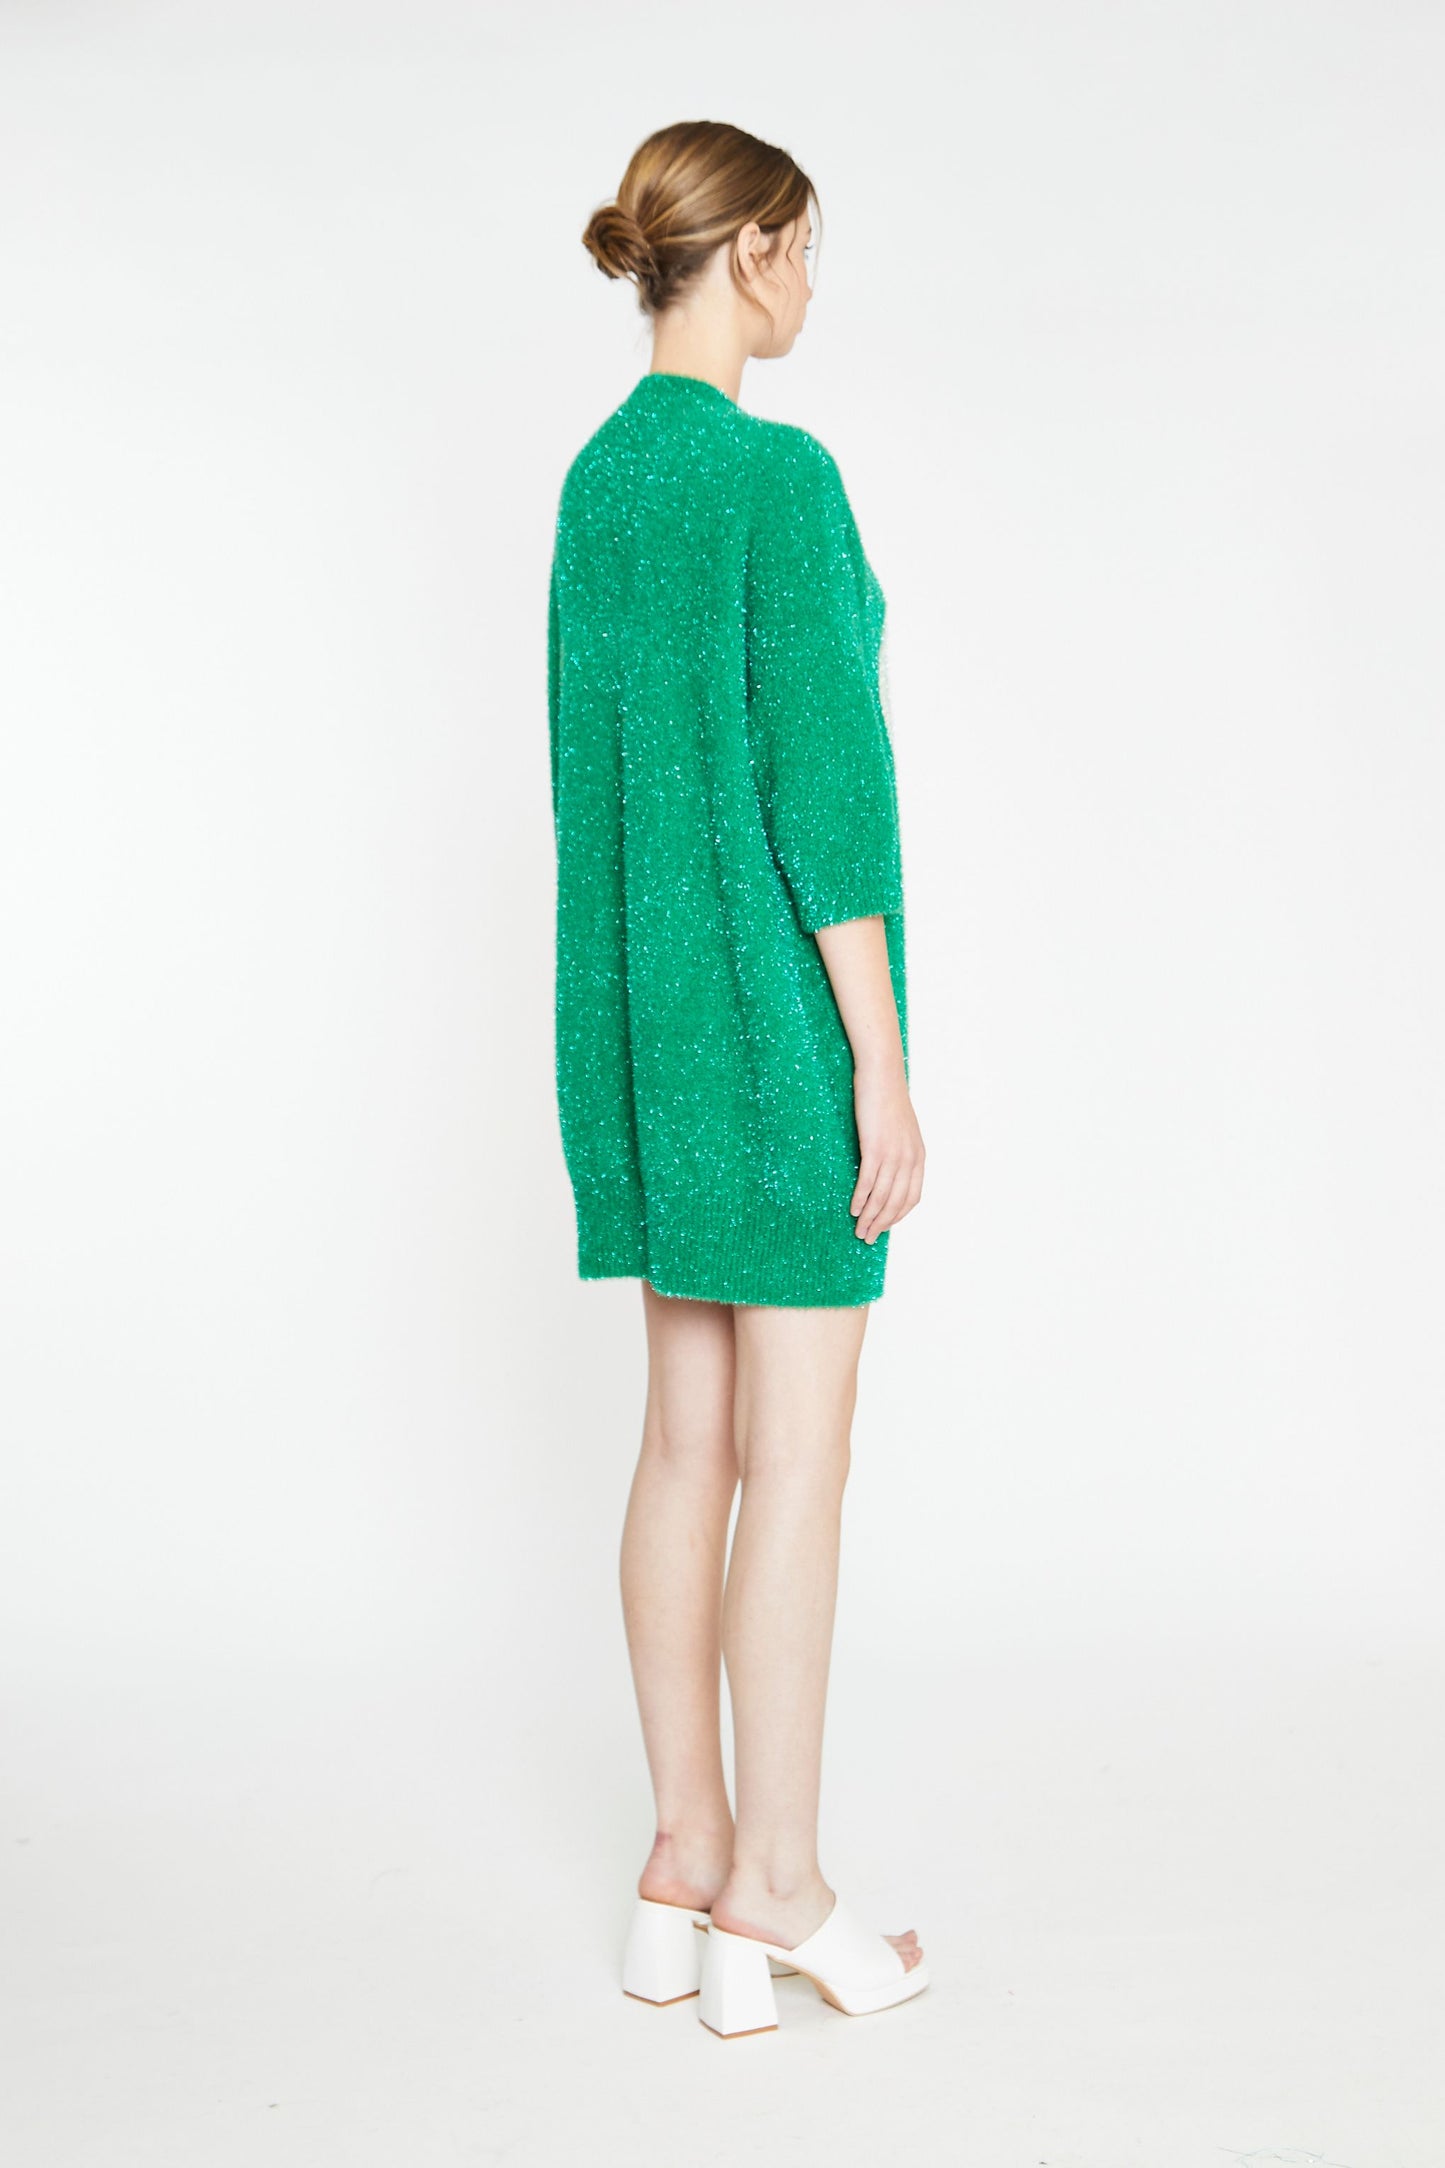 Glamorous - Green Glitter Knit Jumper Dress with large Cream Heart